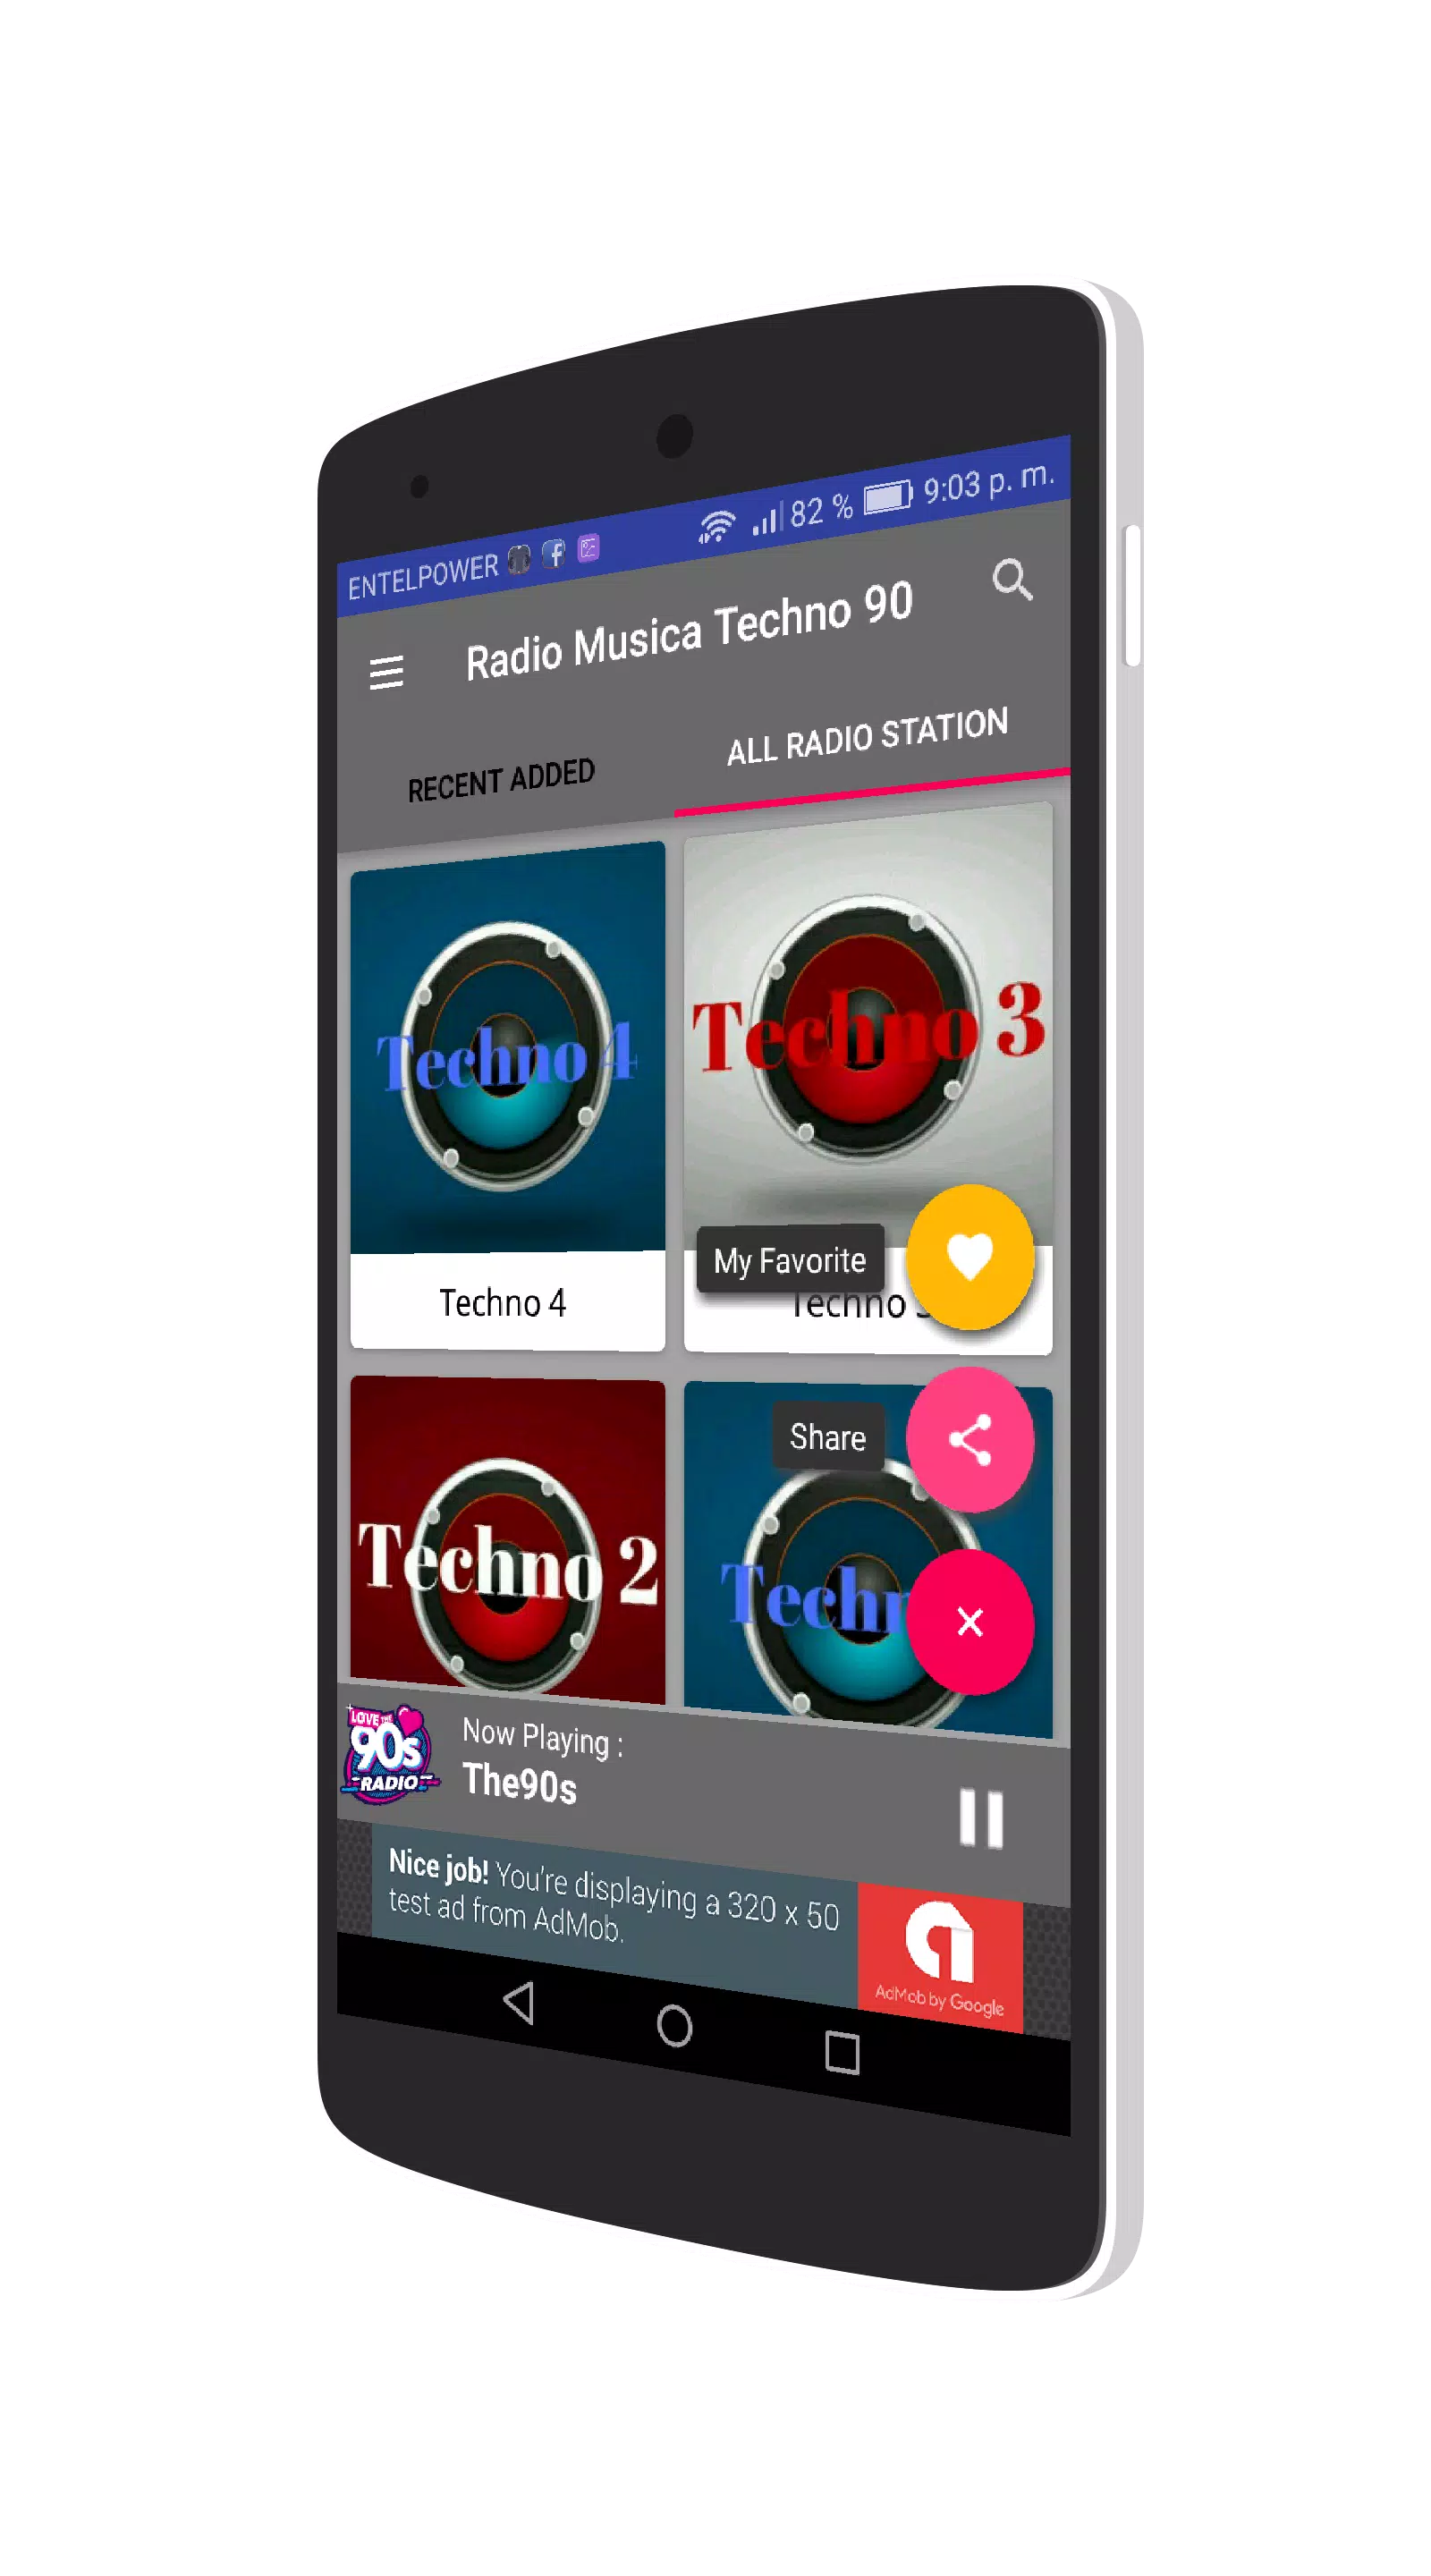 Radio Musica Techno 90 APK for Android Download